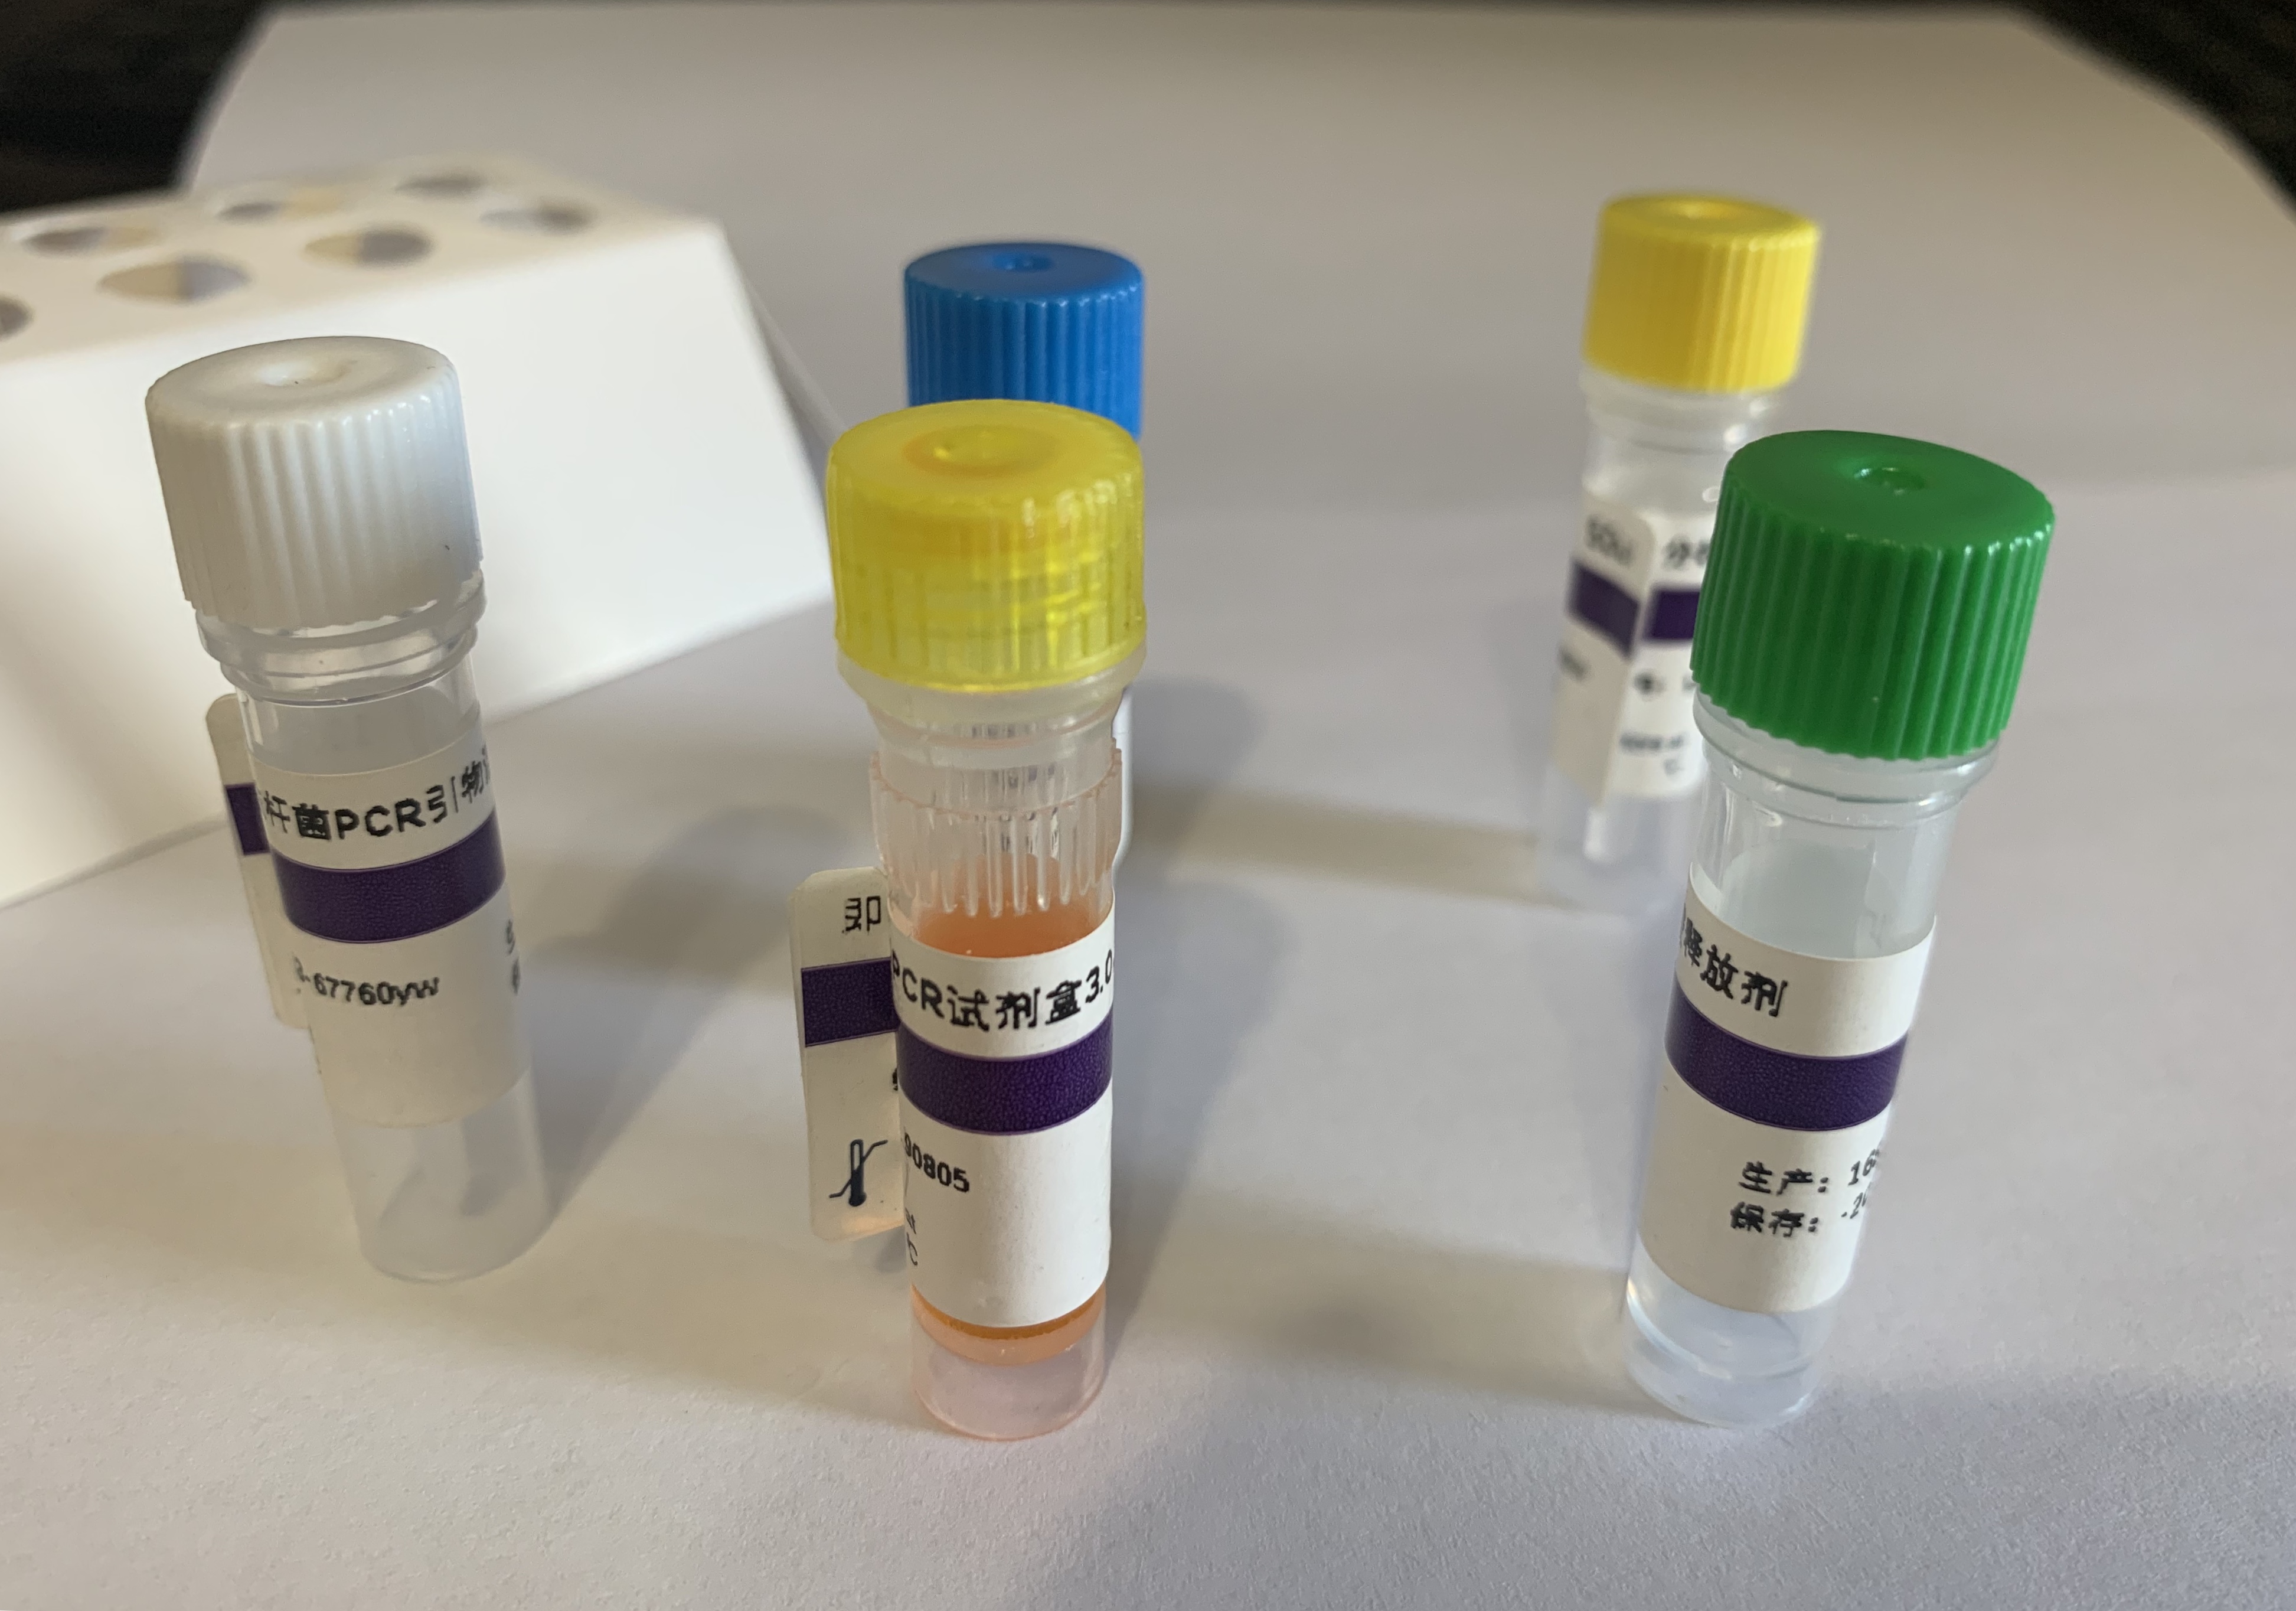 小鼠线粒体DNA通用PCR试剂盒